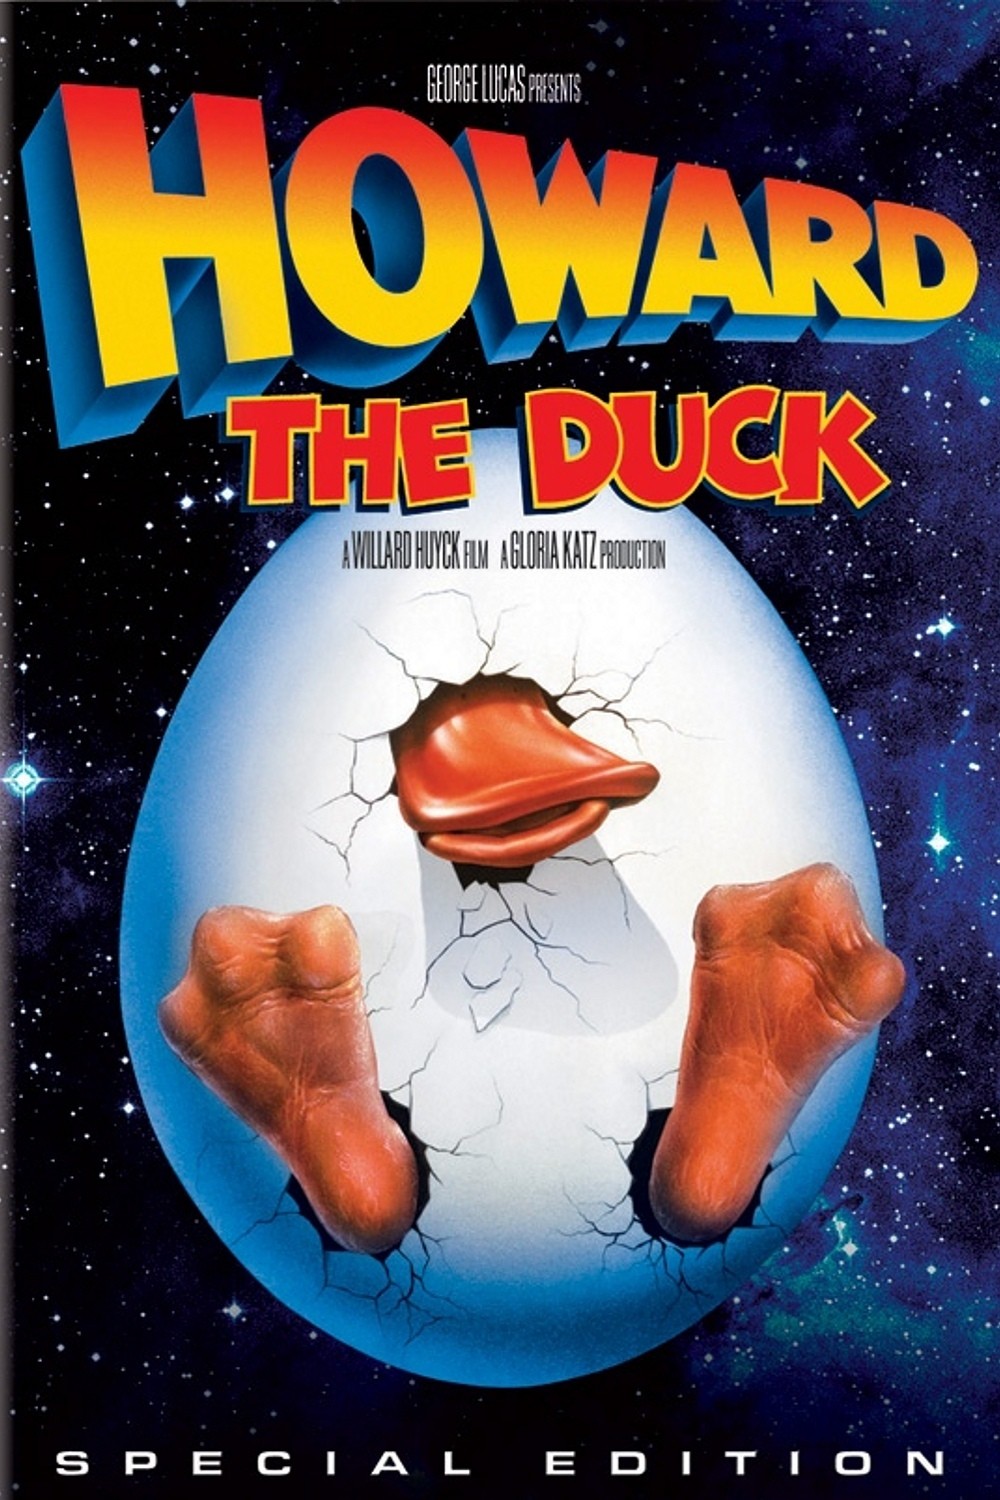 Amazoncom: Howard the Duck Special Edition: Lea